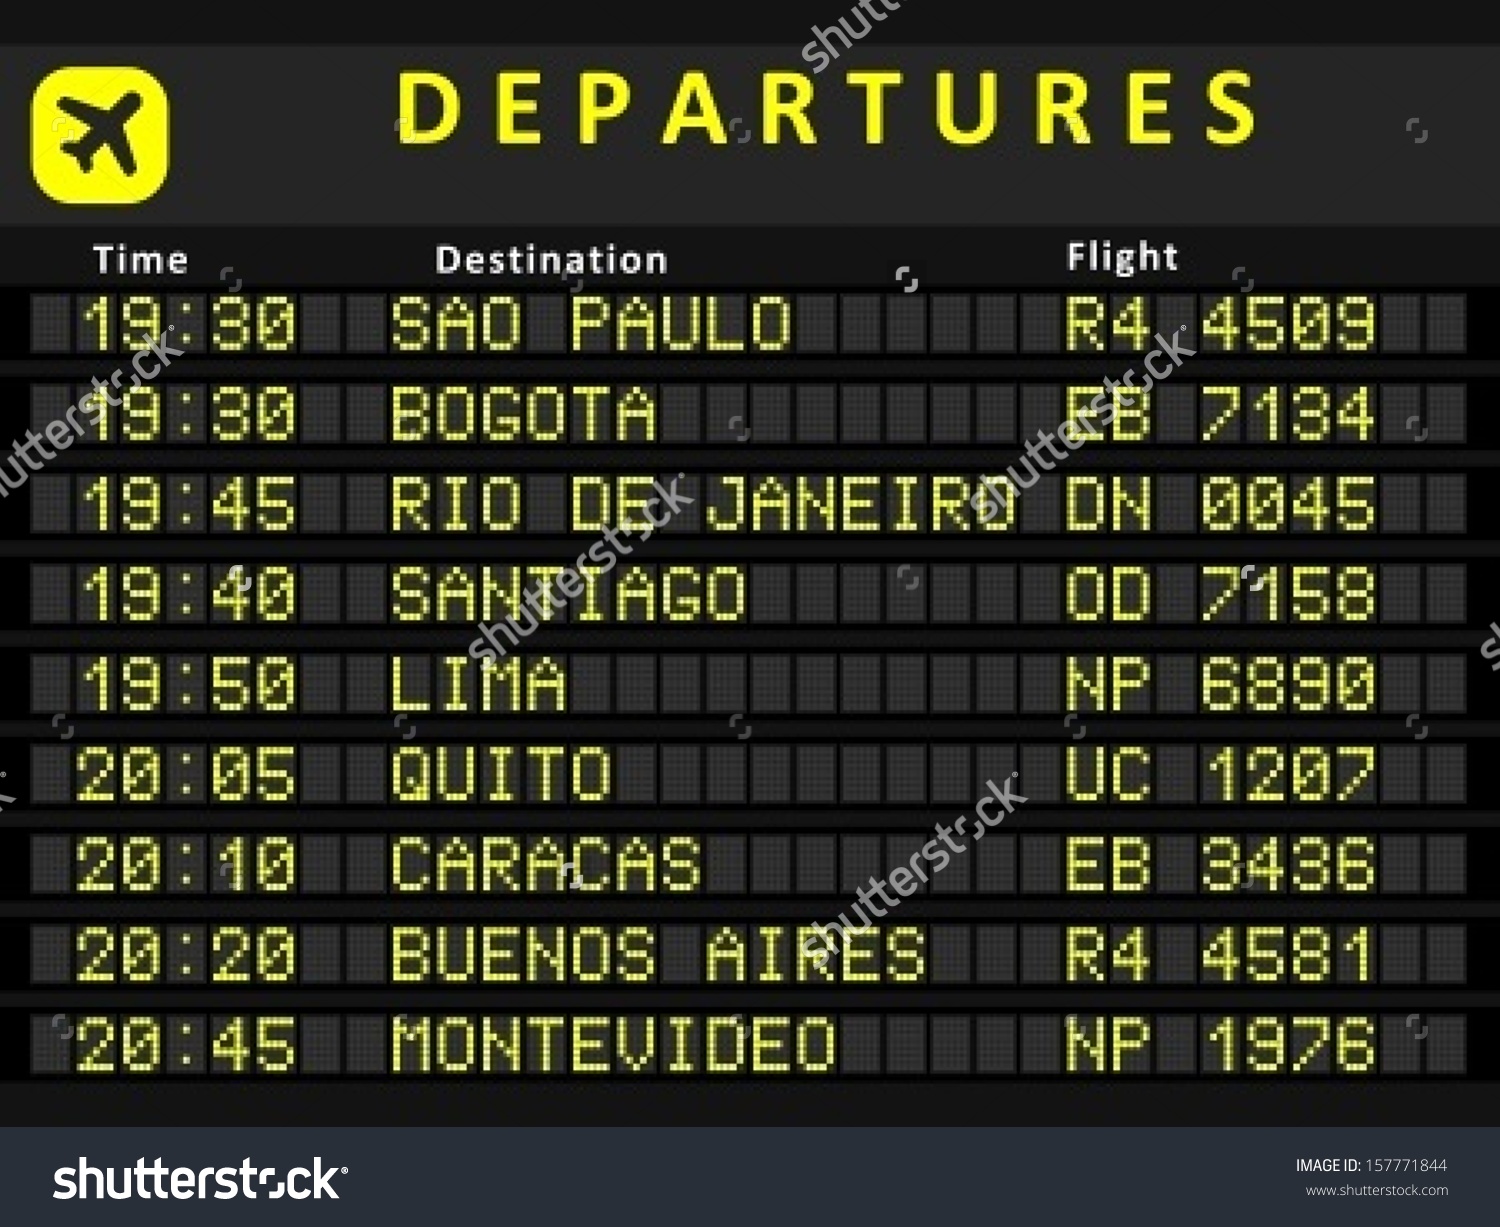 departure timetable